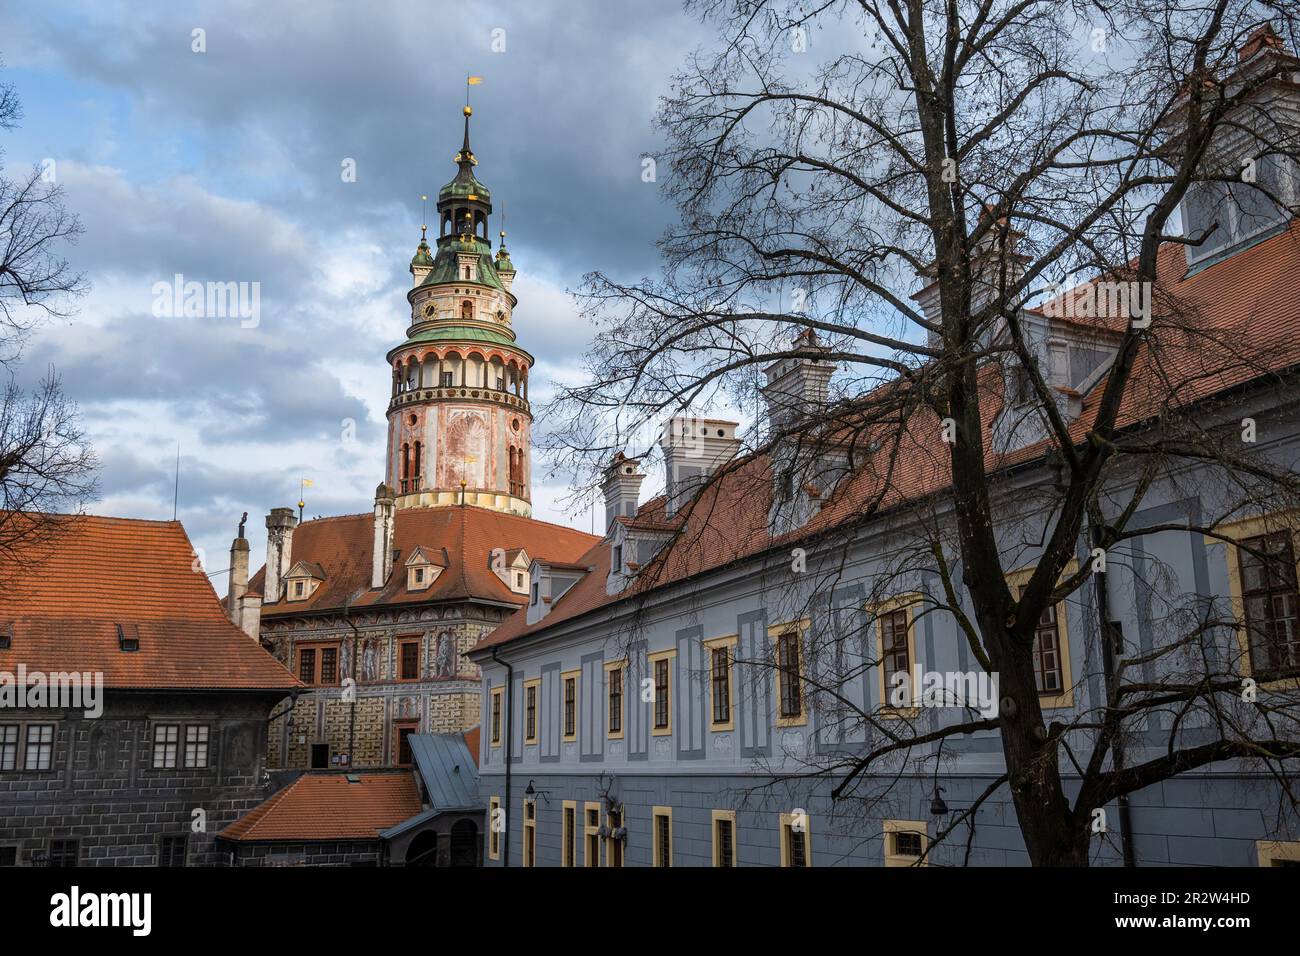 Tower and buildings of Cesky Krumlov castle, South Bohemia. Stock Photo